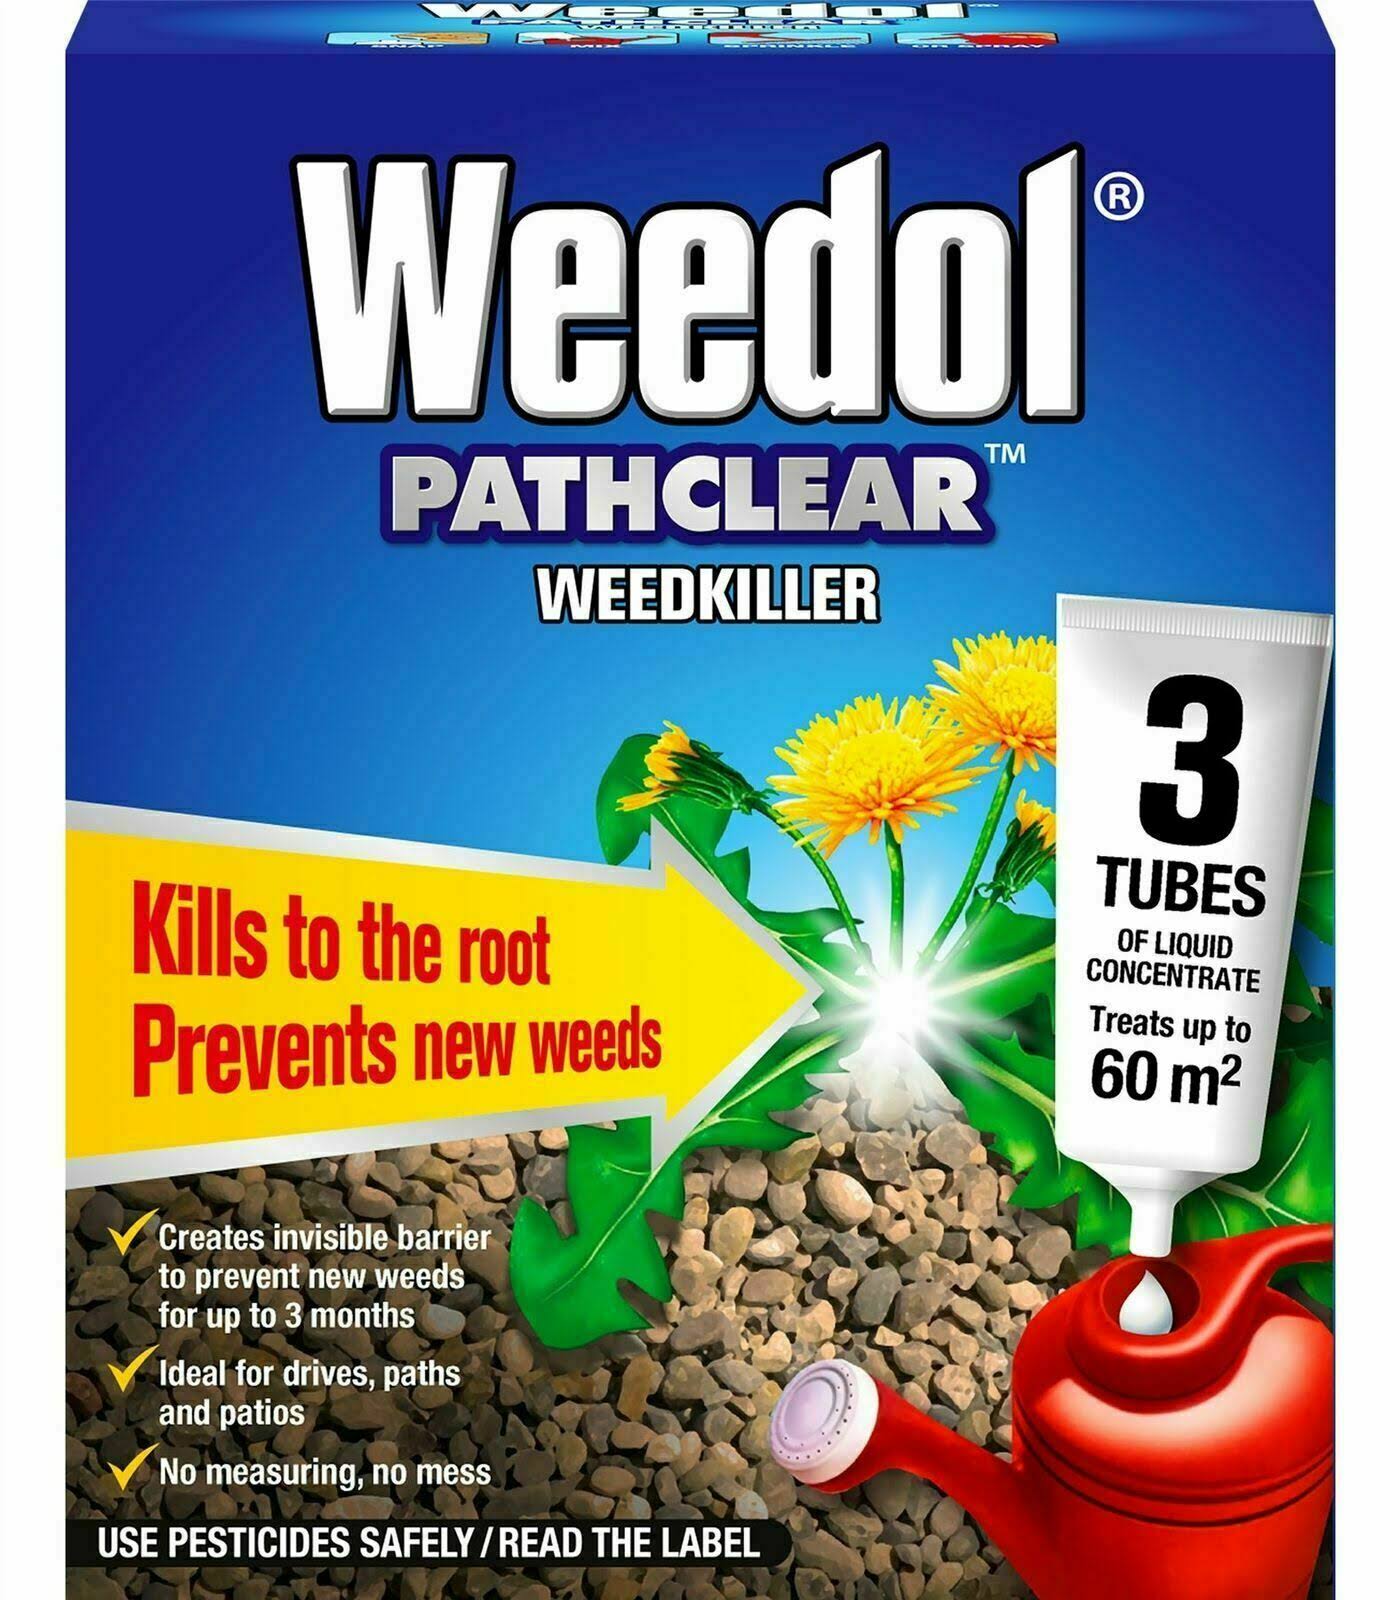 Weedol Pathclear Weedkiller - 3 Tubes